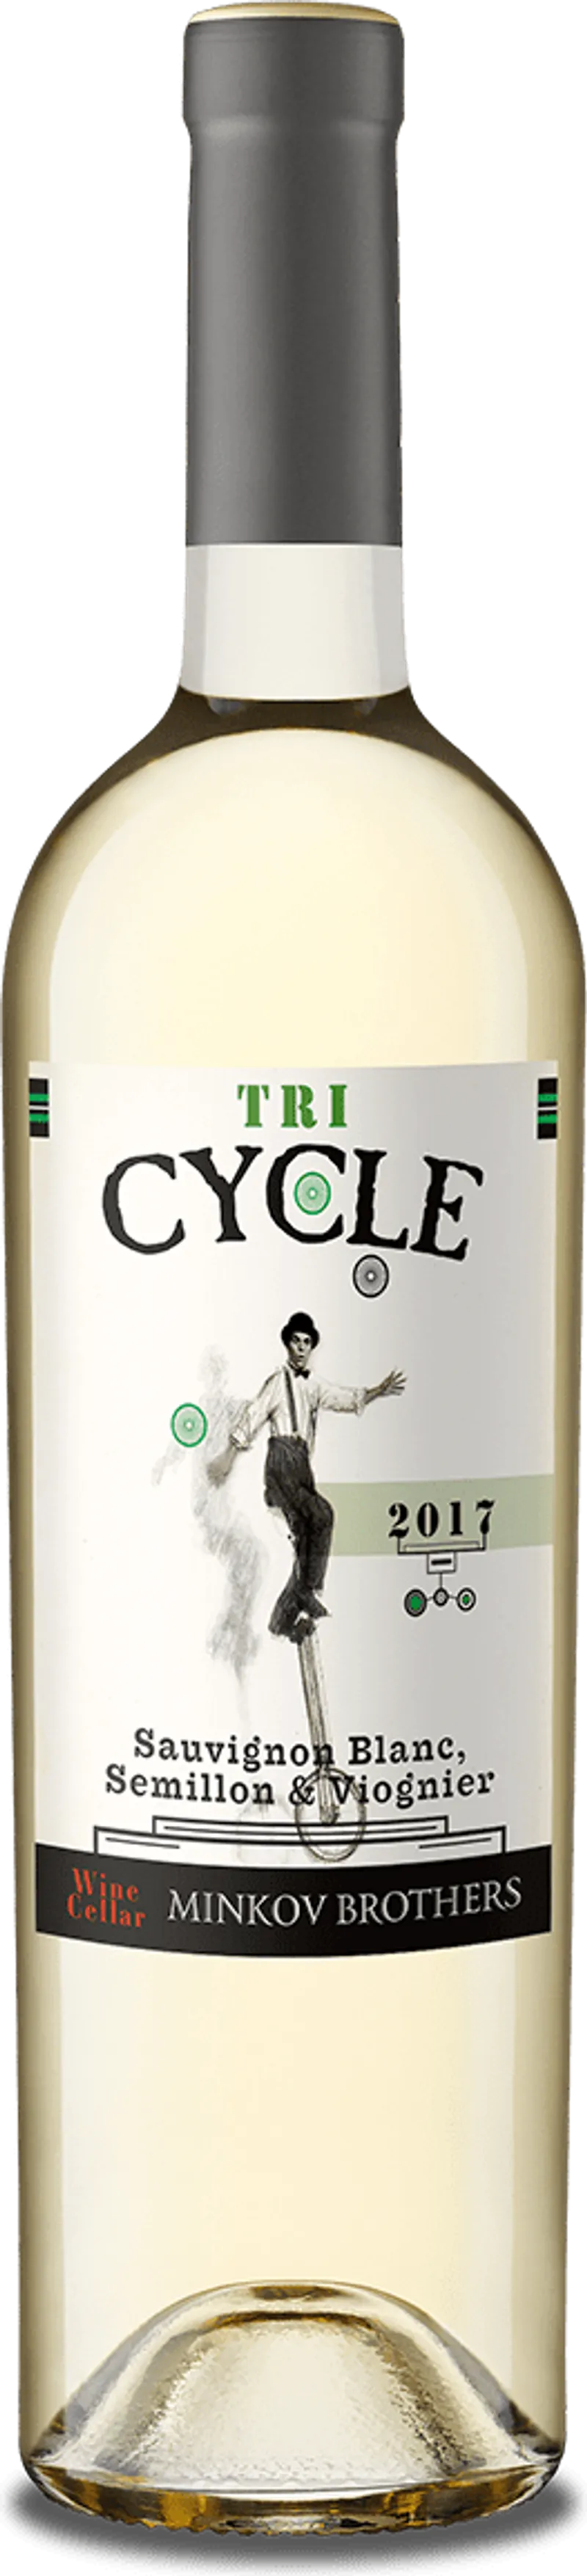 Вино CYCLE Совиньон блан & Семийон & Вионие 750 мл